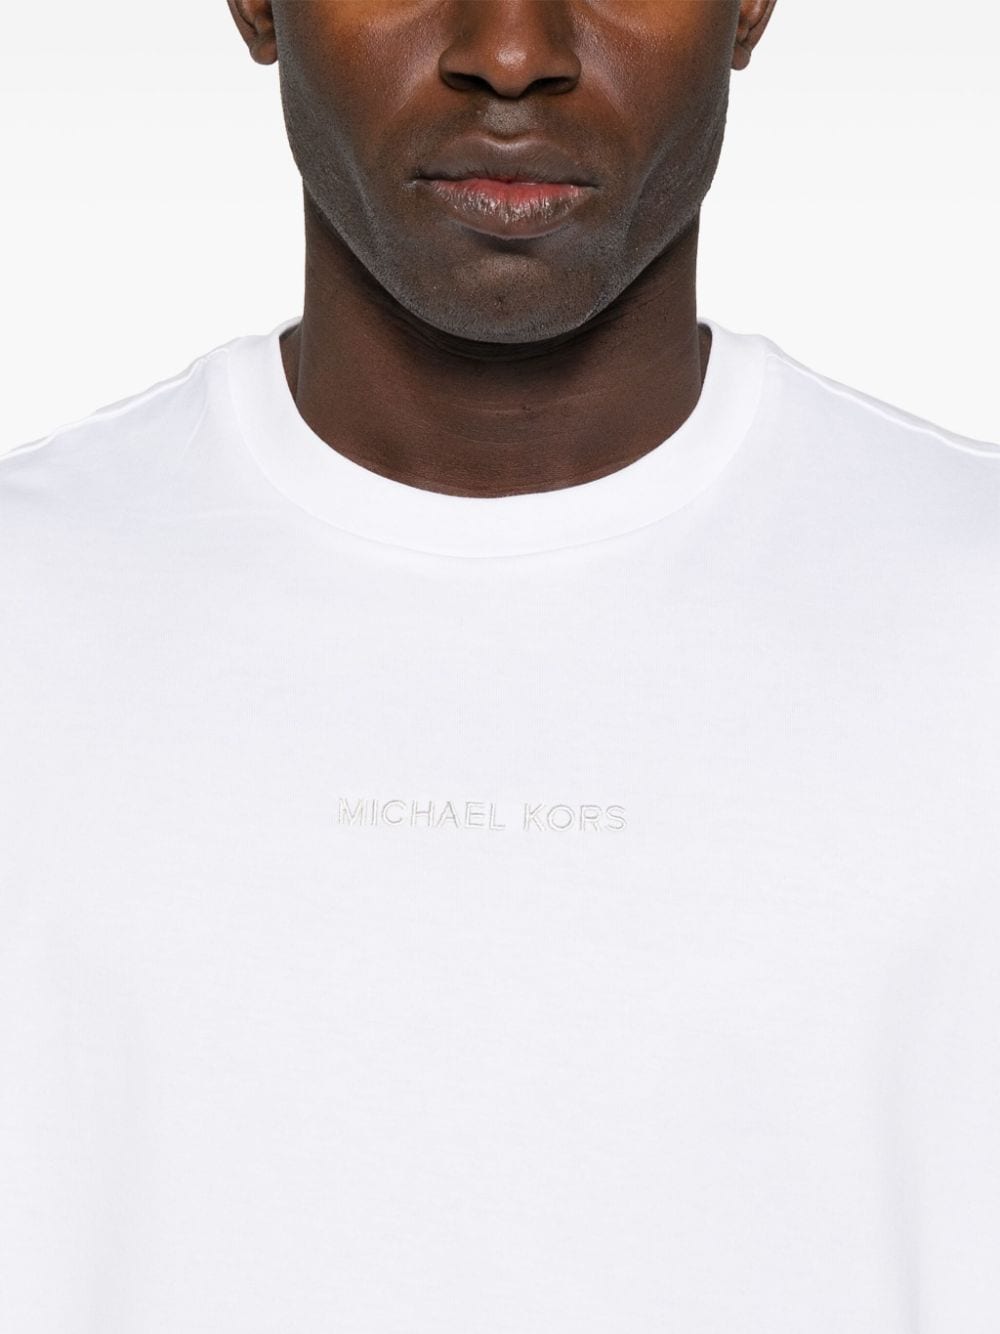 Michael Kors MICHAEL KORS- T-shirt With Logo